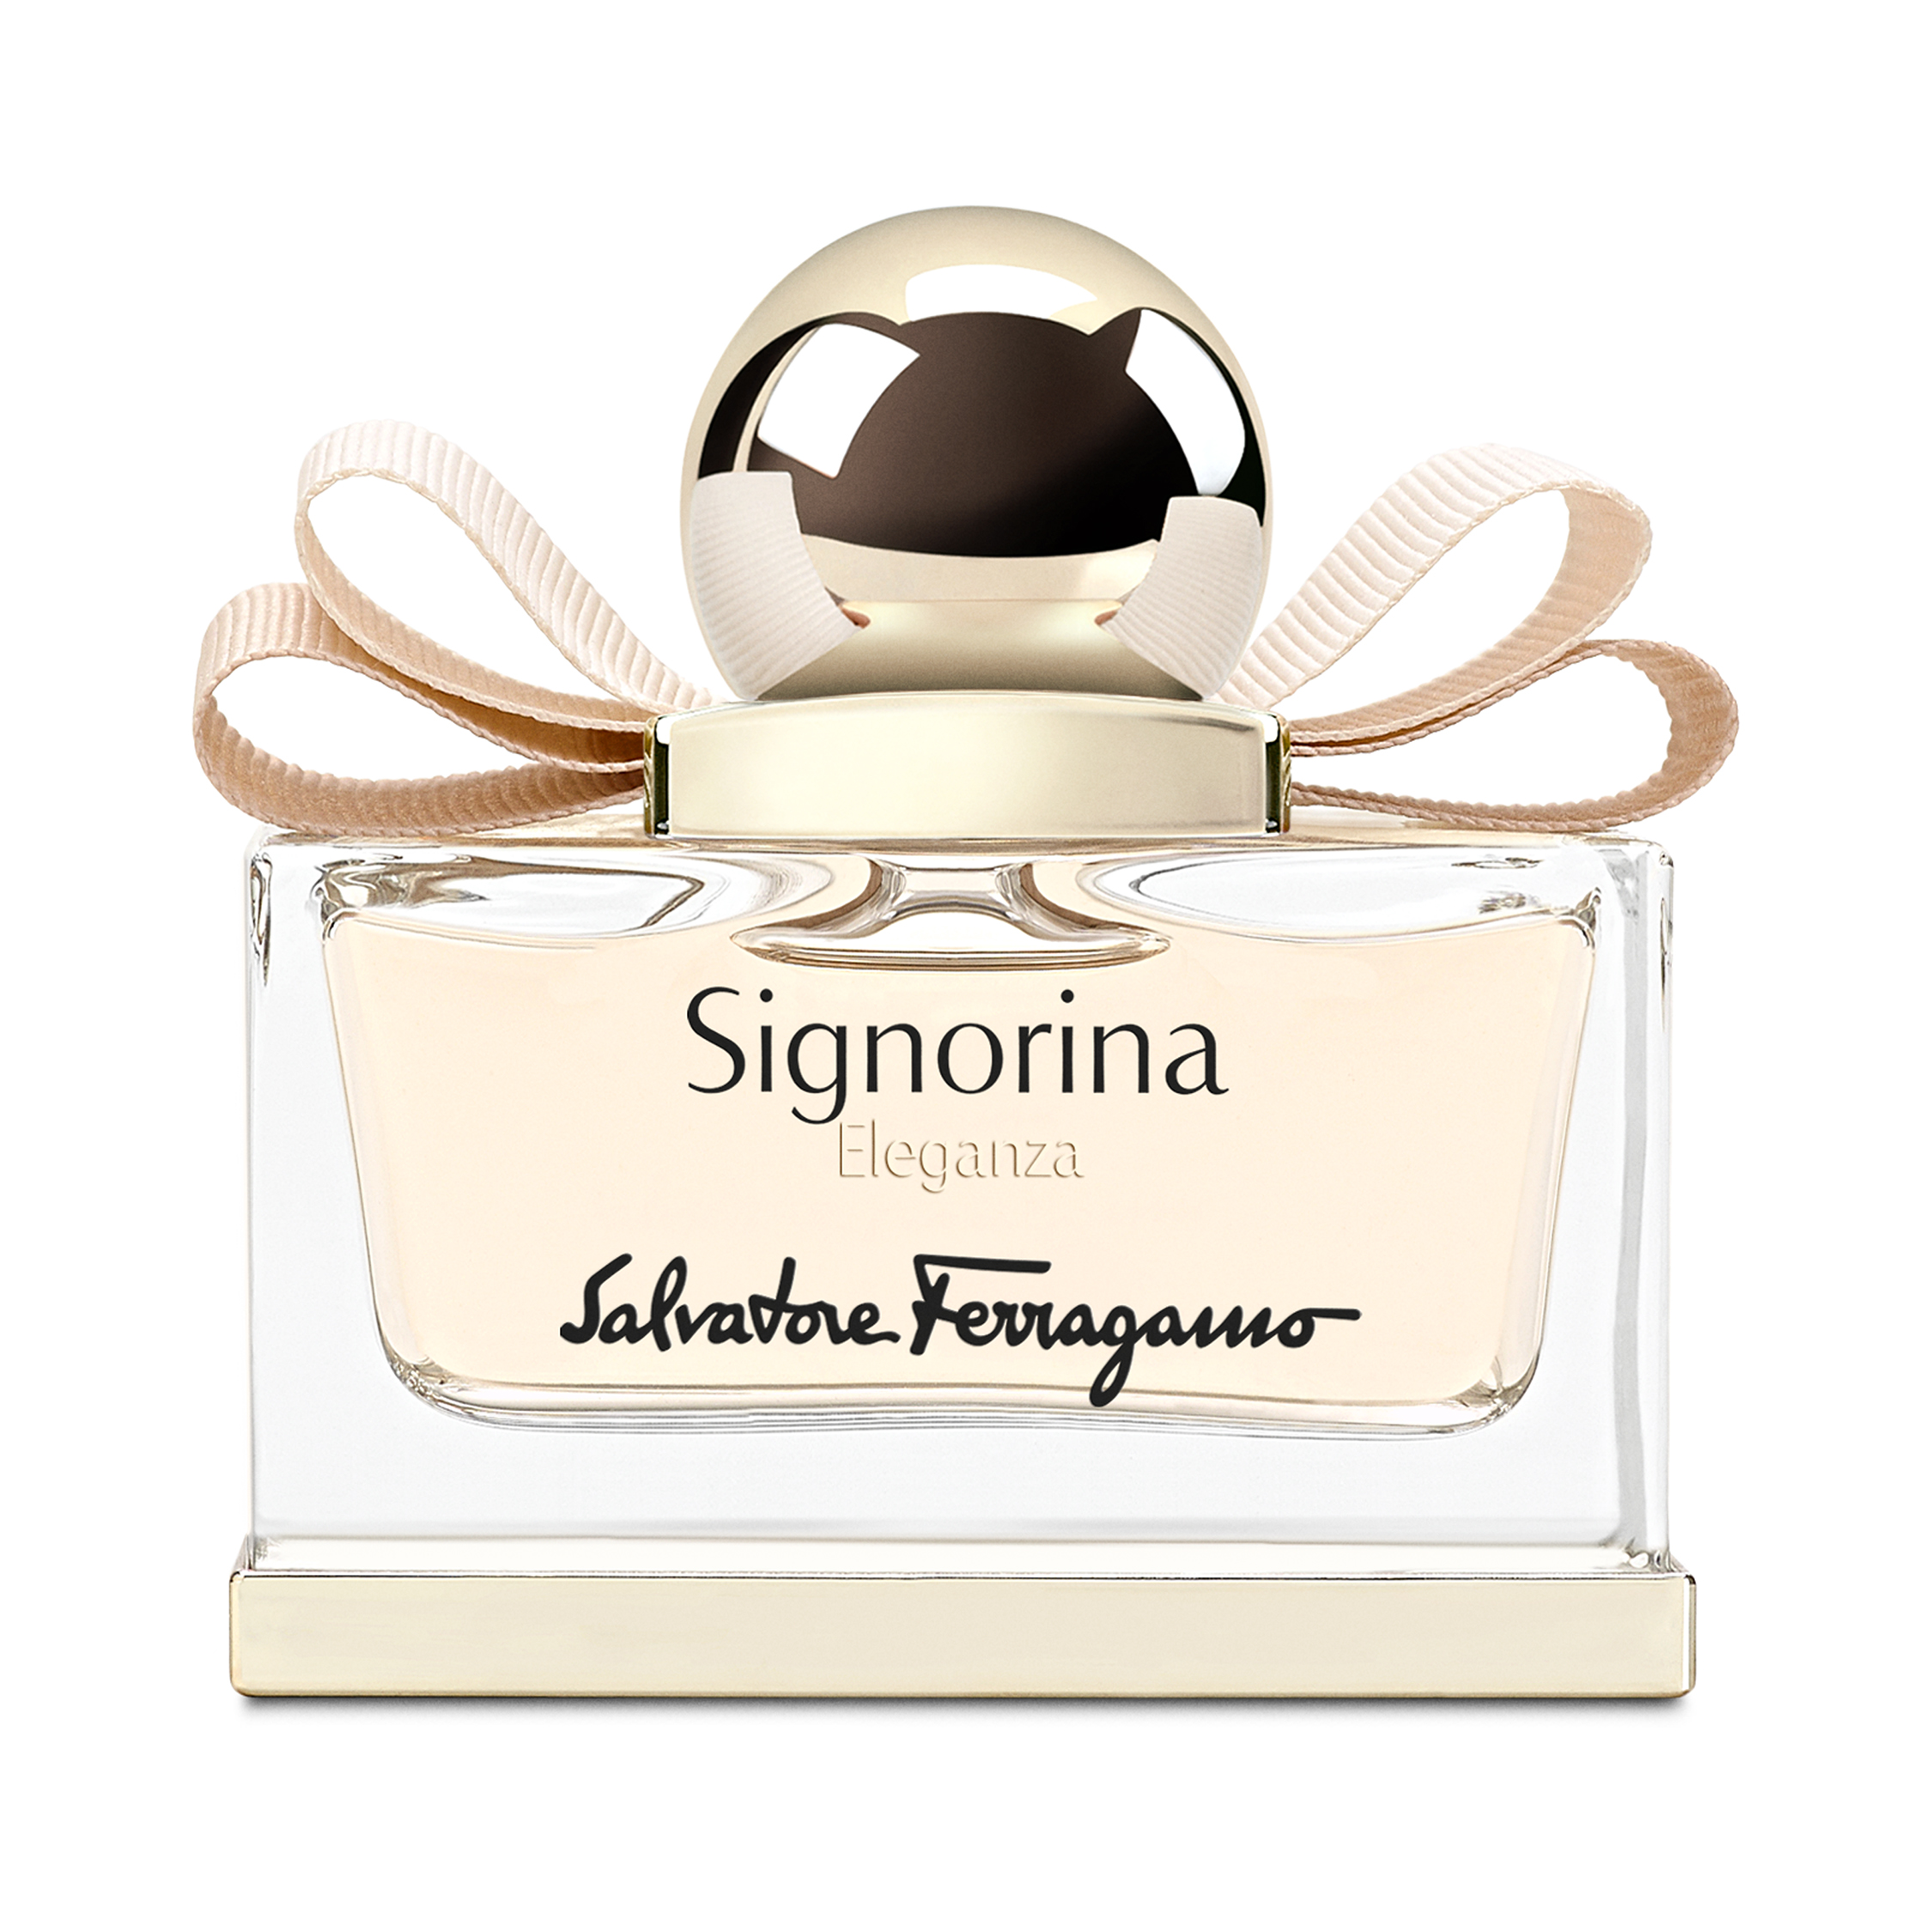 Salvatore Ferragamo Signorina Eleganza Eau de Parfum 30 ml | lyko.com